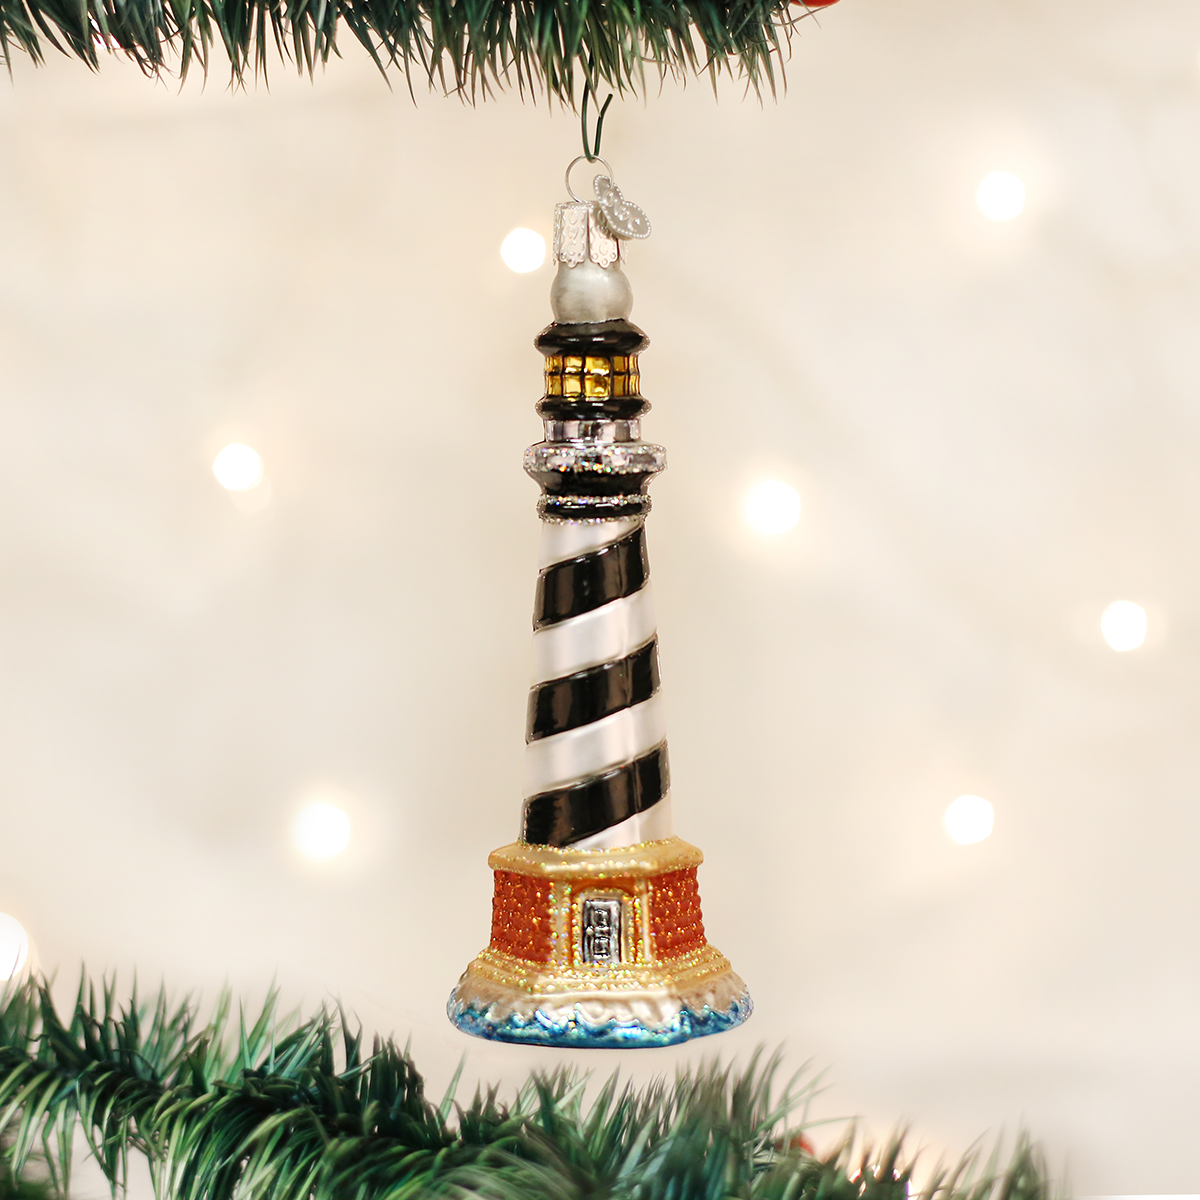 Cape Hatteras Lighthouse Christmas Ornament